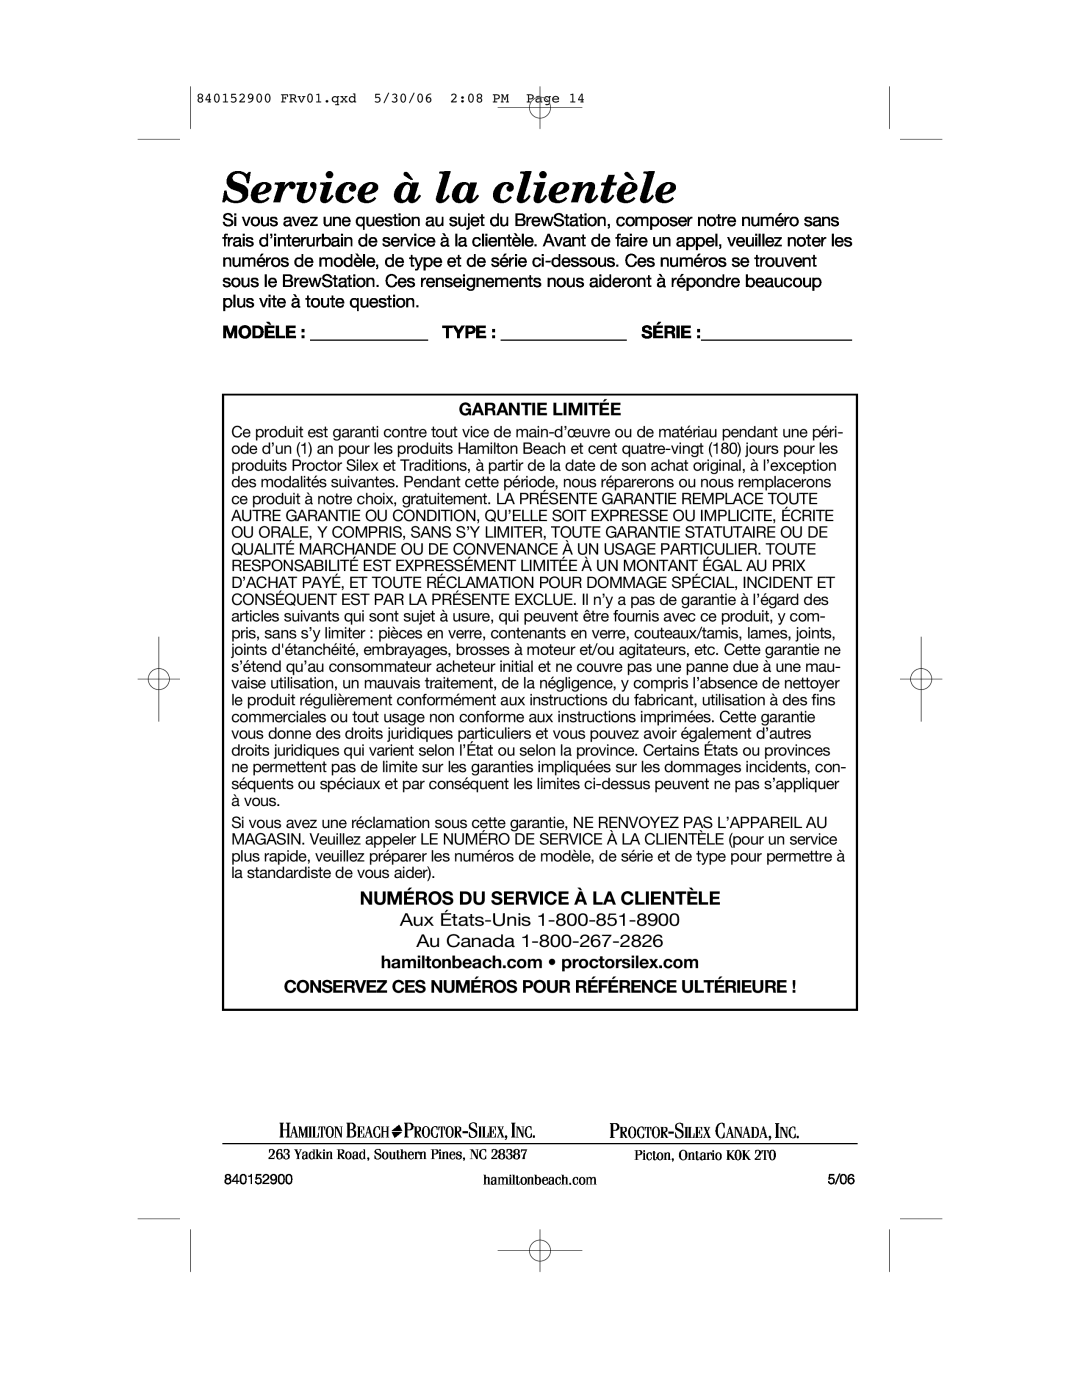 Hamilton Beach 47535C manual Service à la clientèle, Numéros Du Service À La Clientèle, Modèle Type Série Garantie Limitée 